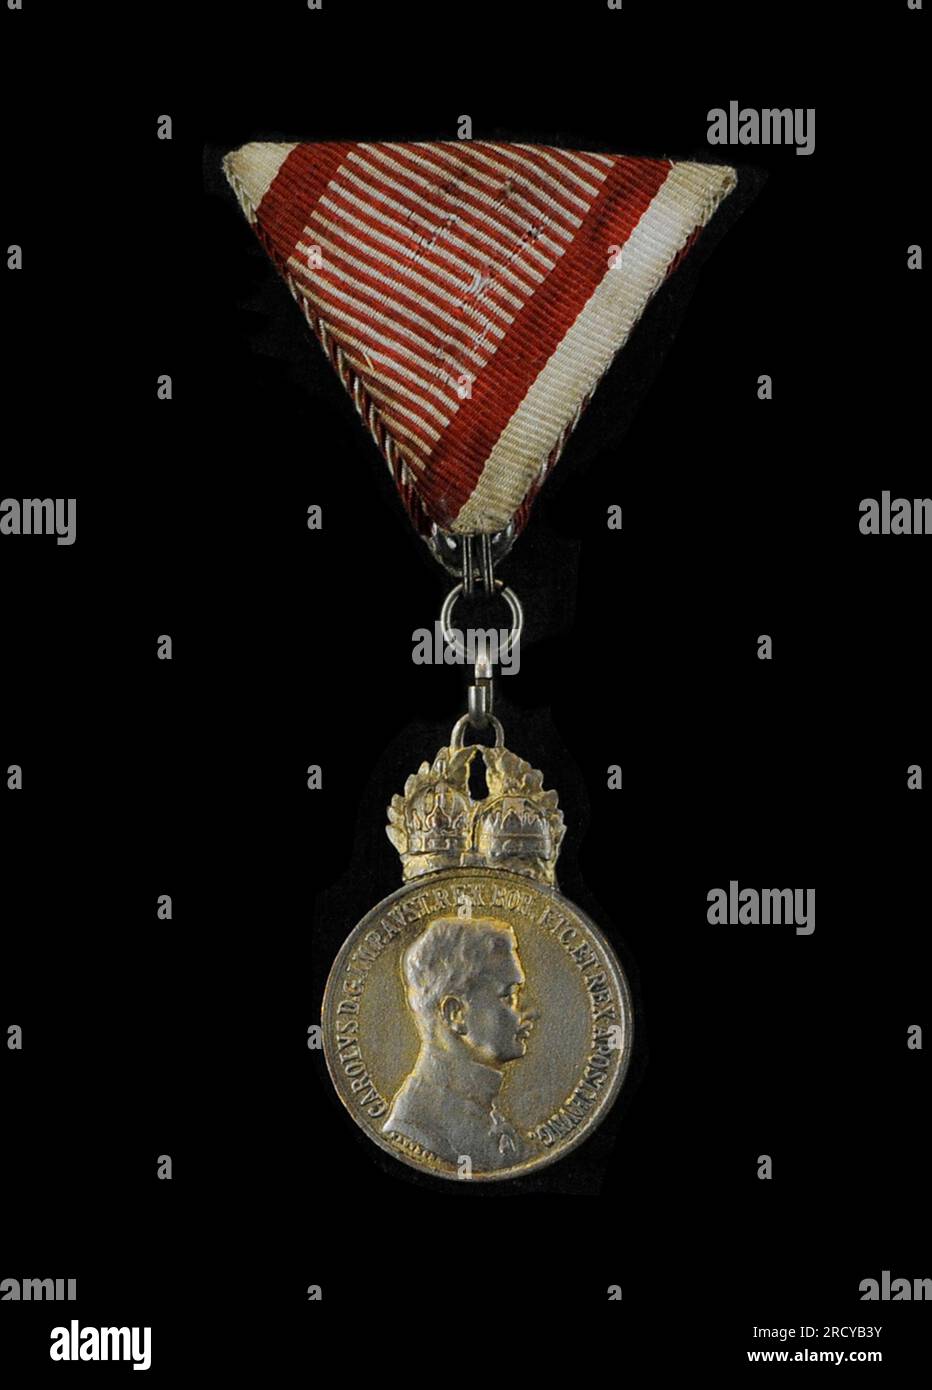 Austro-Hungarian Empire. Medal of Military Merit 'Signum Laudis”. Emperor Charles I (1887-1922). Established by Emperor Franz Joseph I of Austria on 12 March 1890. Latvian War Museum. Riga. Latvia. Stock Photo